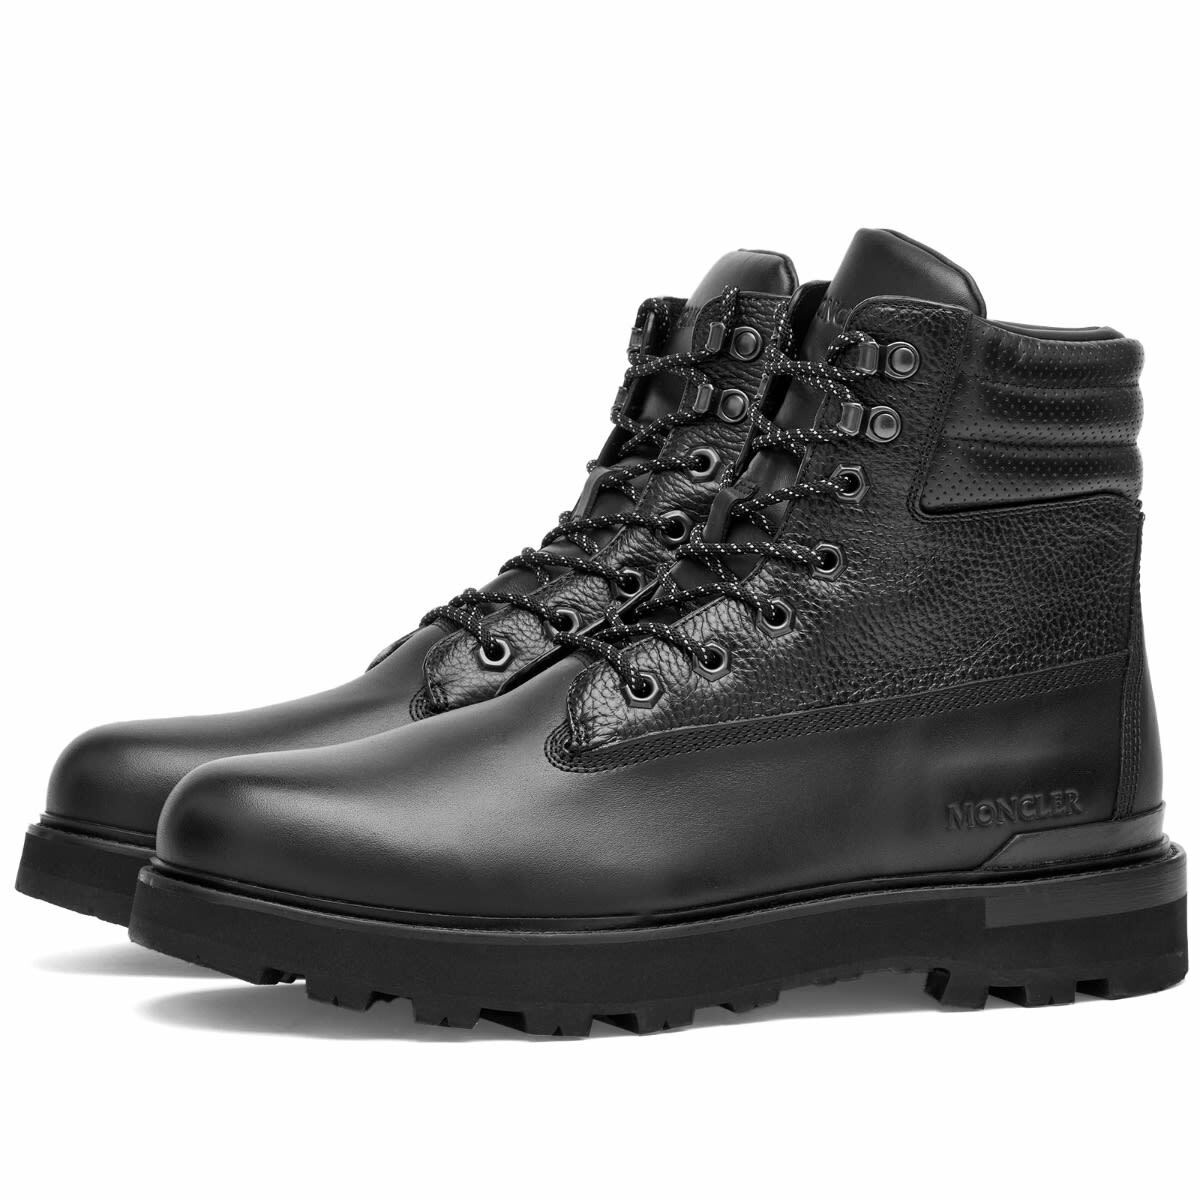 Moncler Men's Peka Hiking Boots in Black Moncler